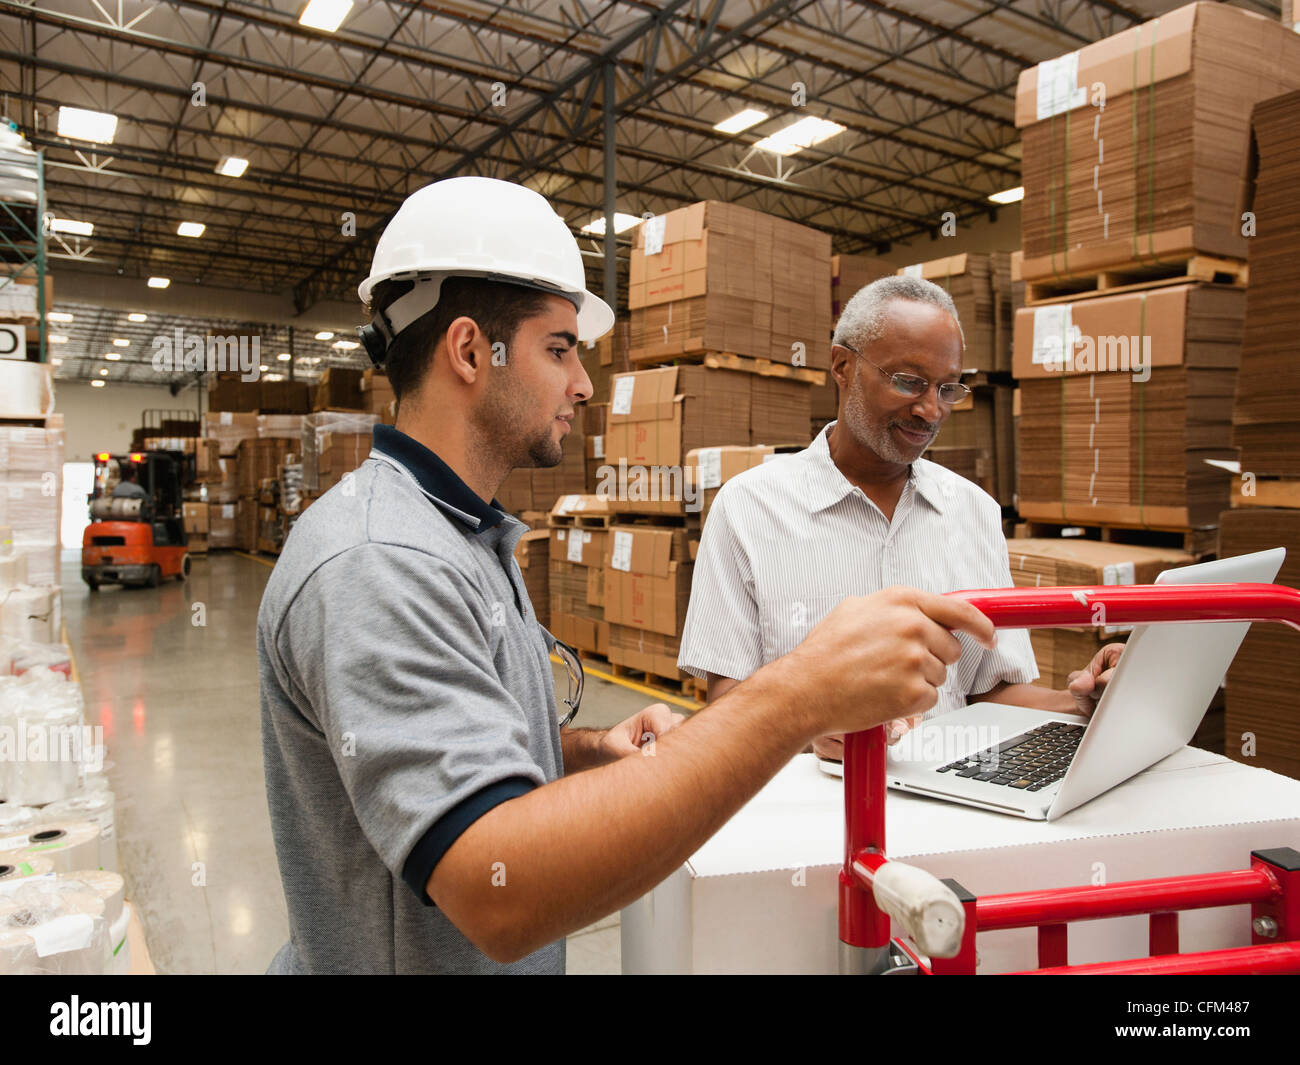 USA, California, Santa Ana, Men working in warehouse Stock Photo